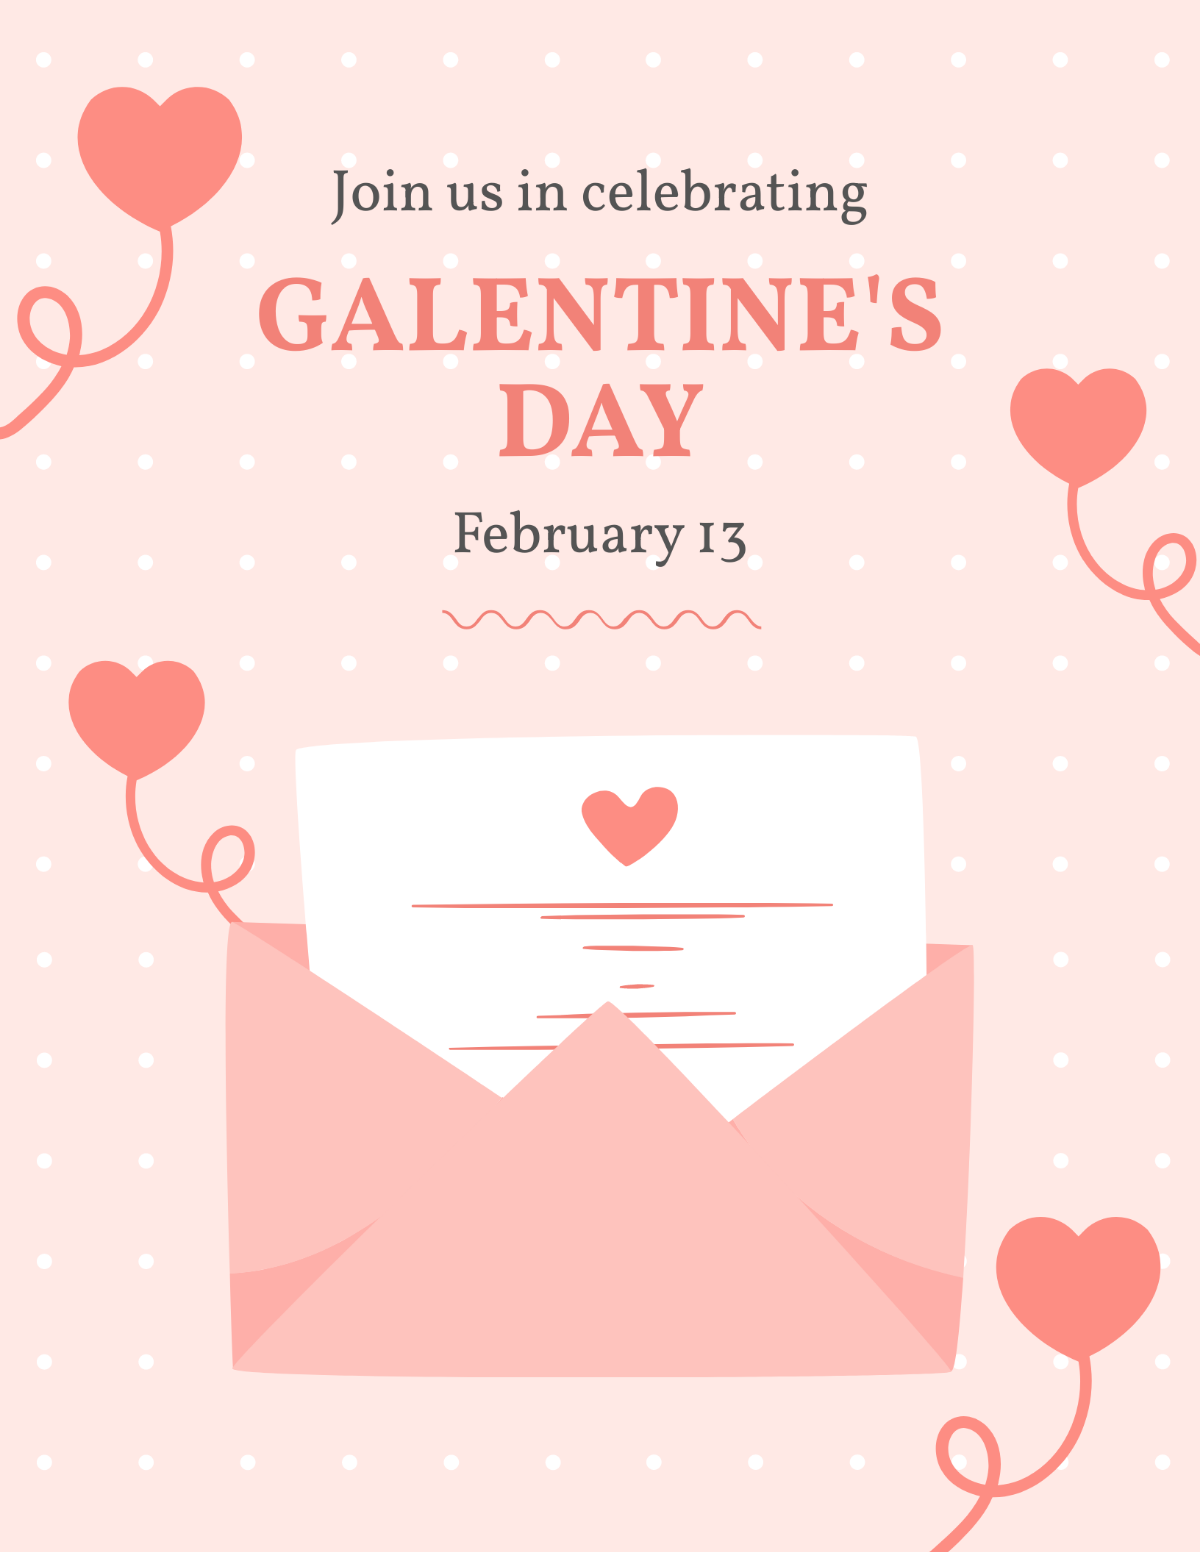 Free Galentine's Day Invitation Flyer Template